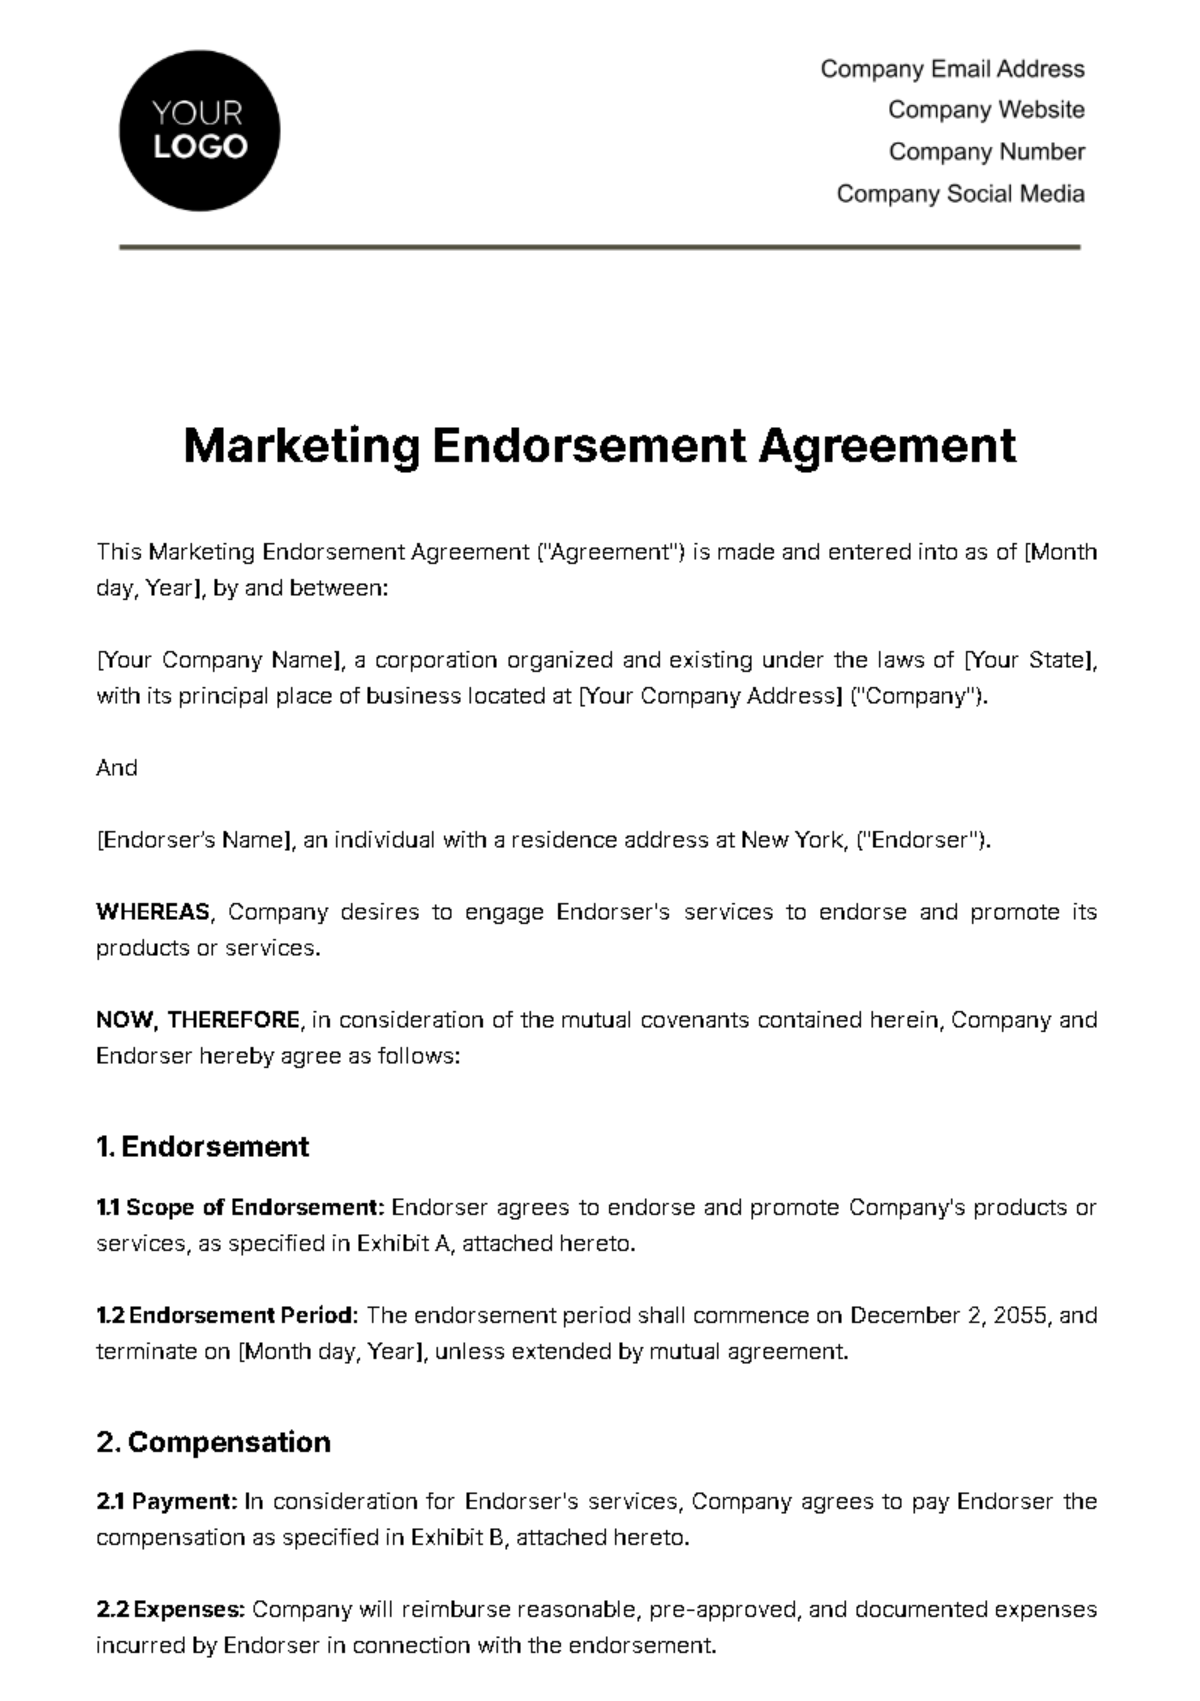 Free Marketing Endorsement Agreement Template